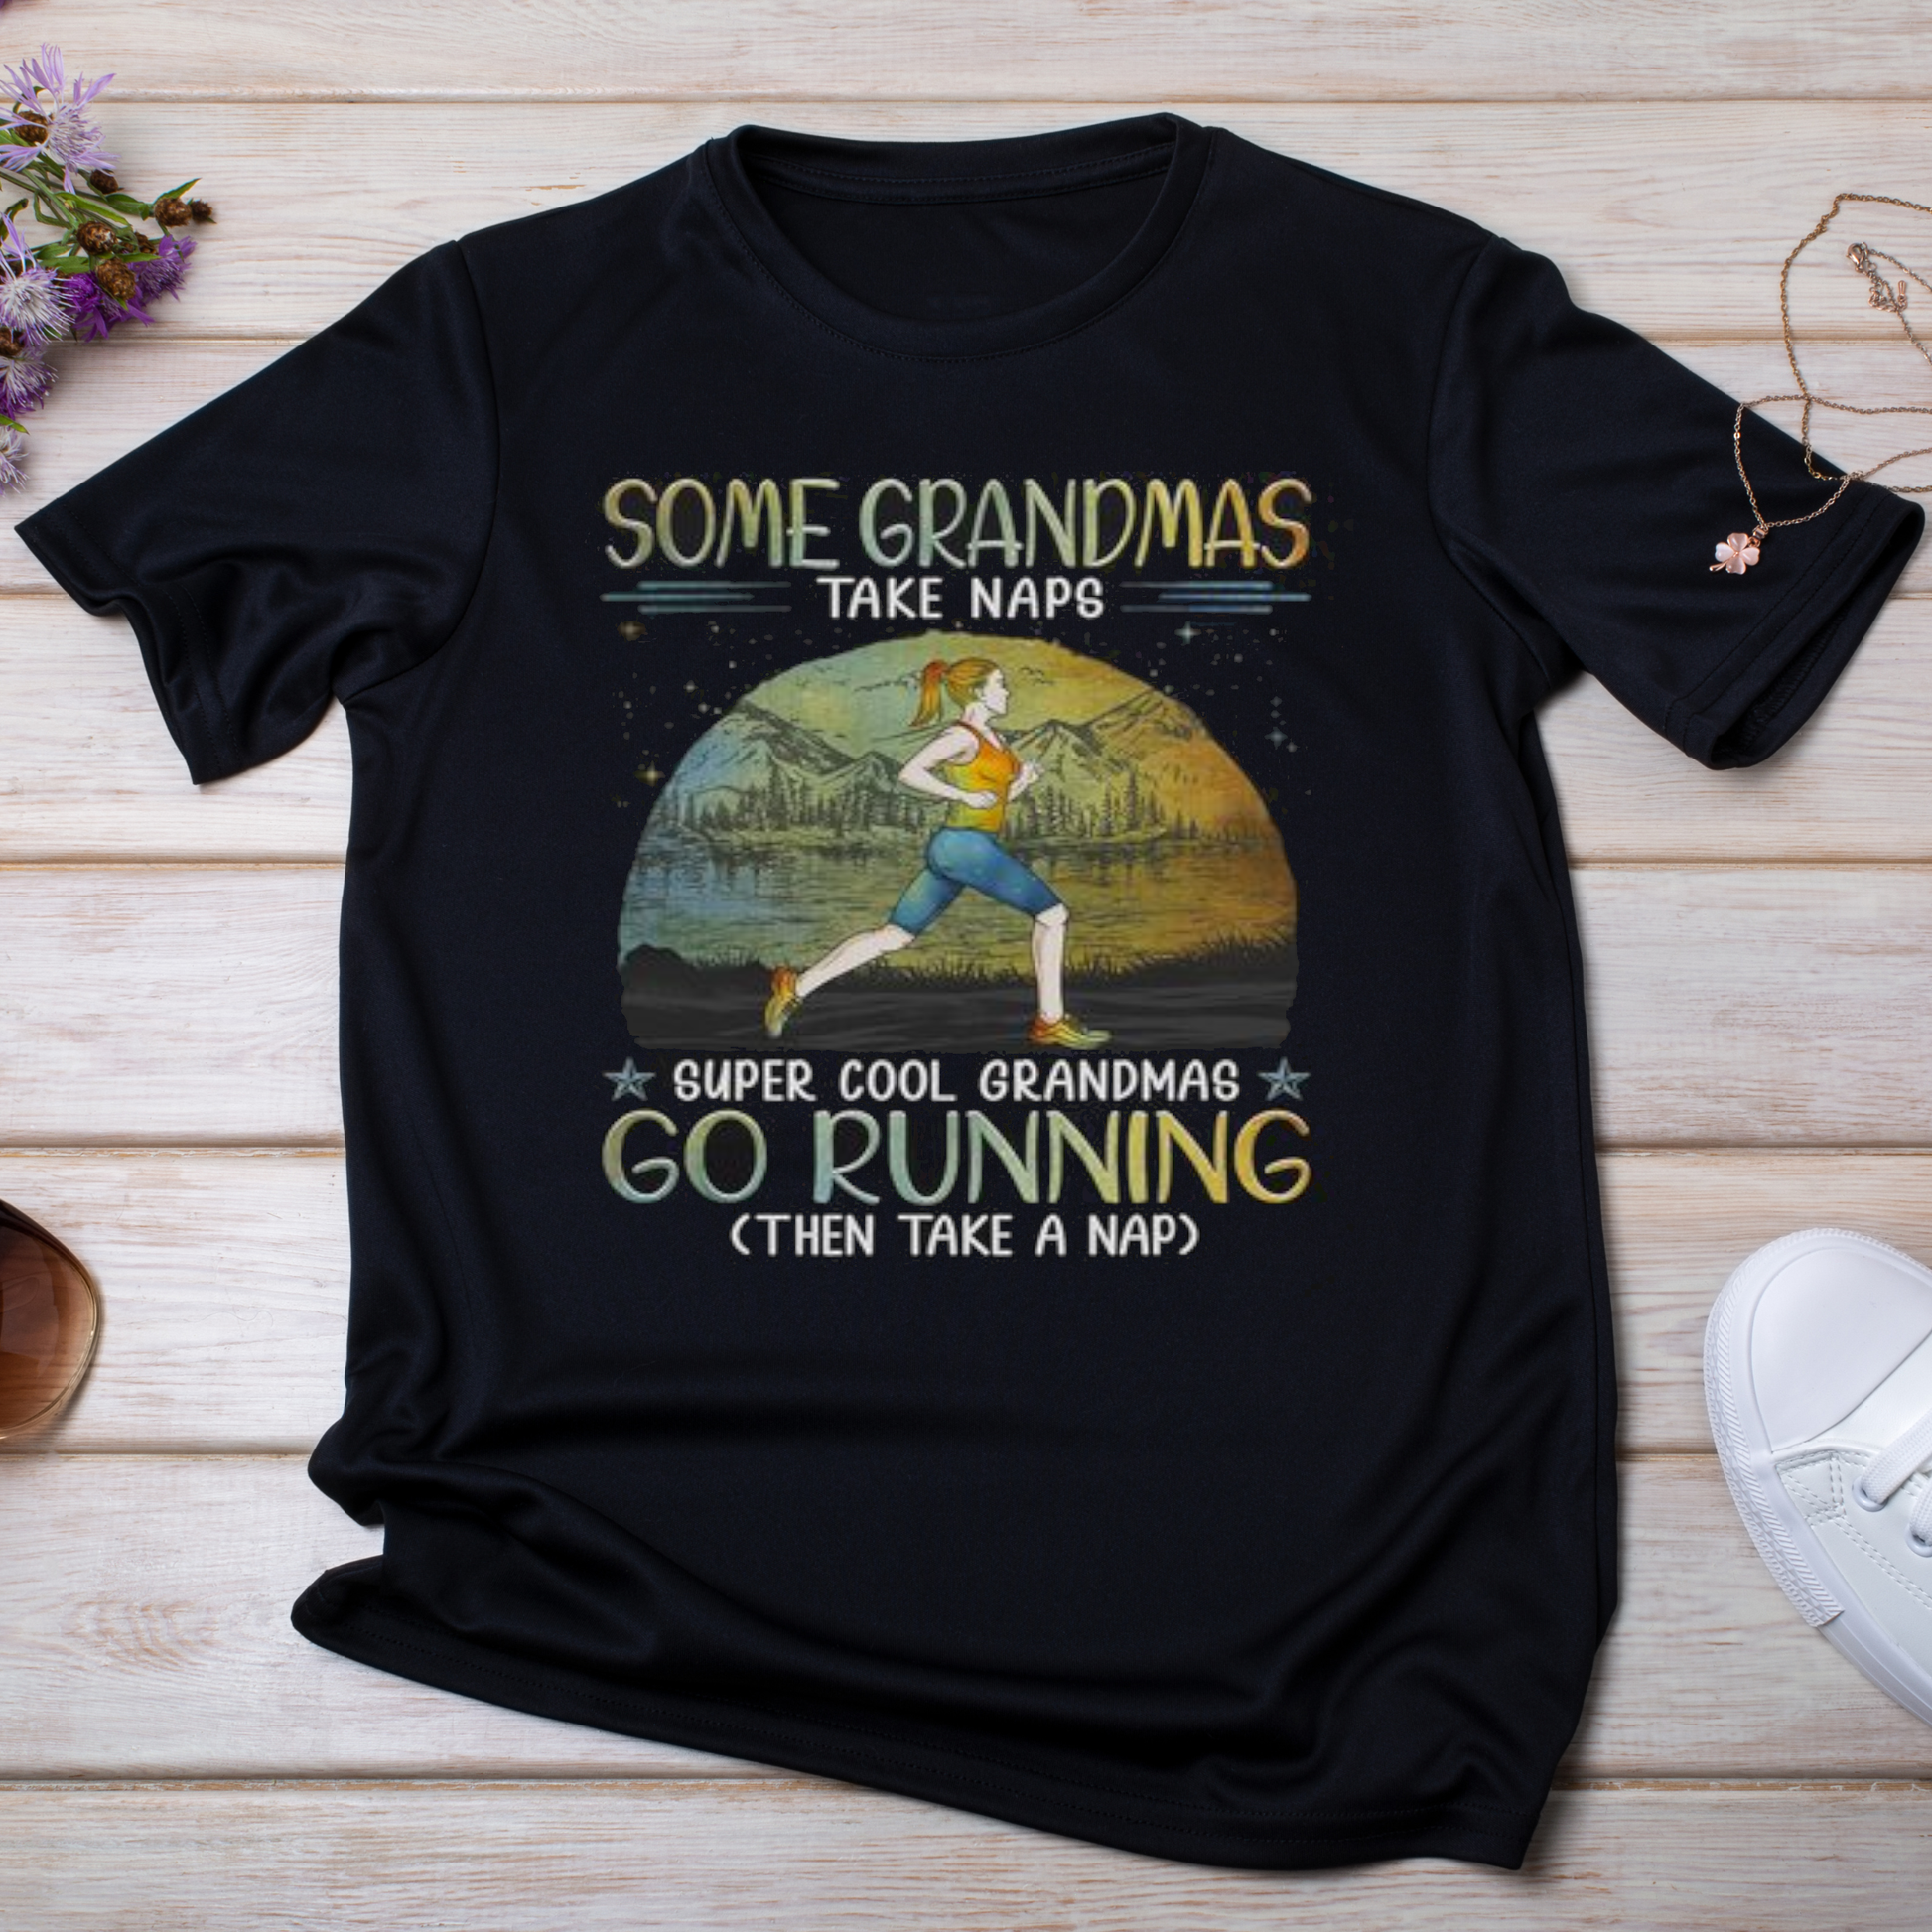 Some Grandmas take naps super cool Grandmas go running t-shirt - Premium t-shirt from MyDesigns - Just $16.95! Shop now at Lees Krazy Teez